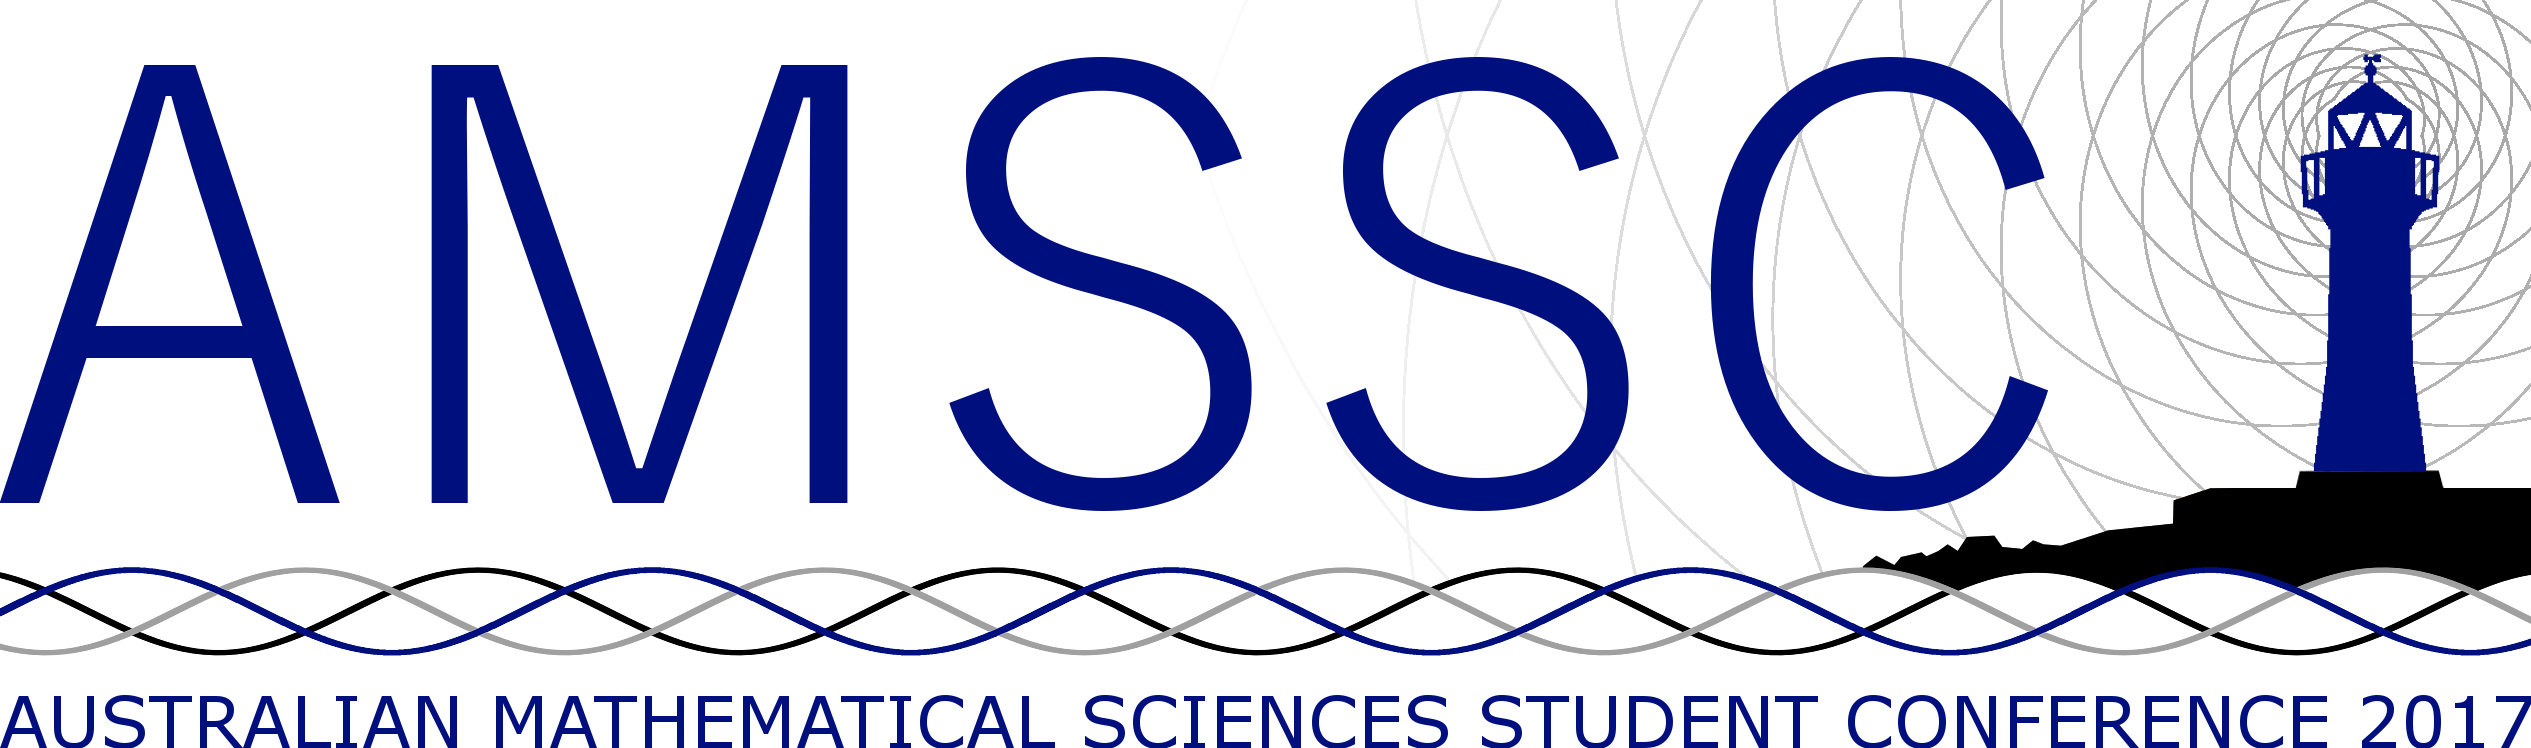 AMSSC2017 Logo